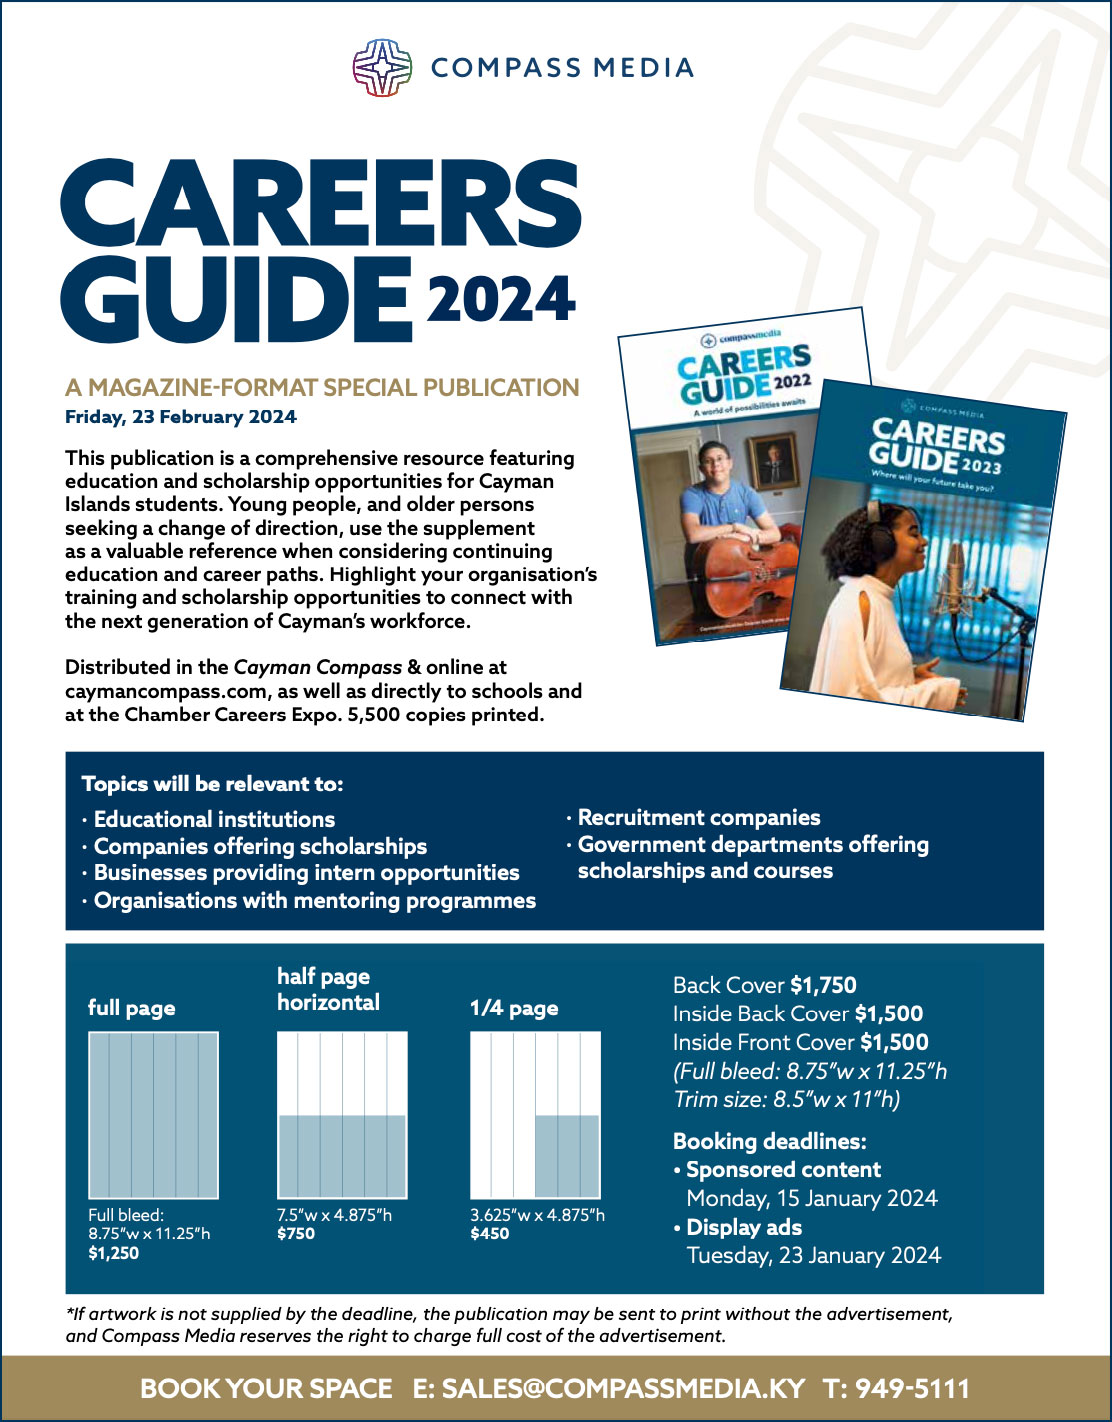 Careers Guide rate sheet PDF